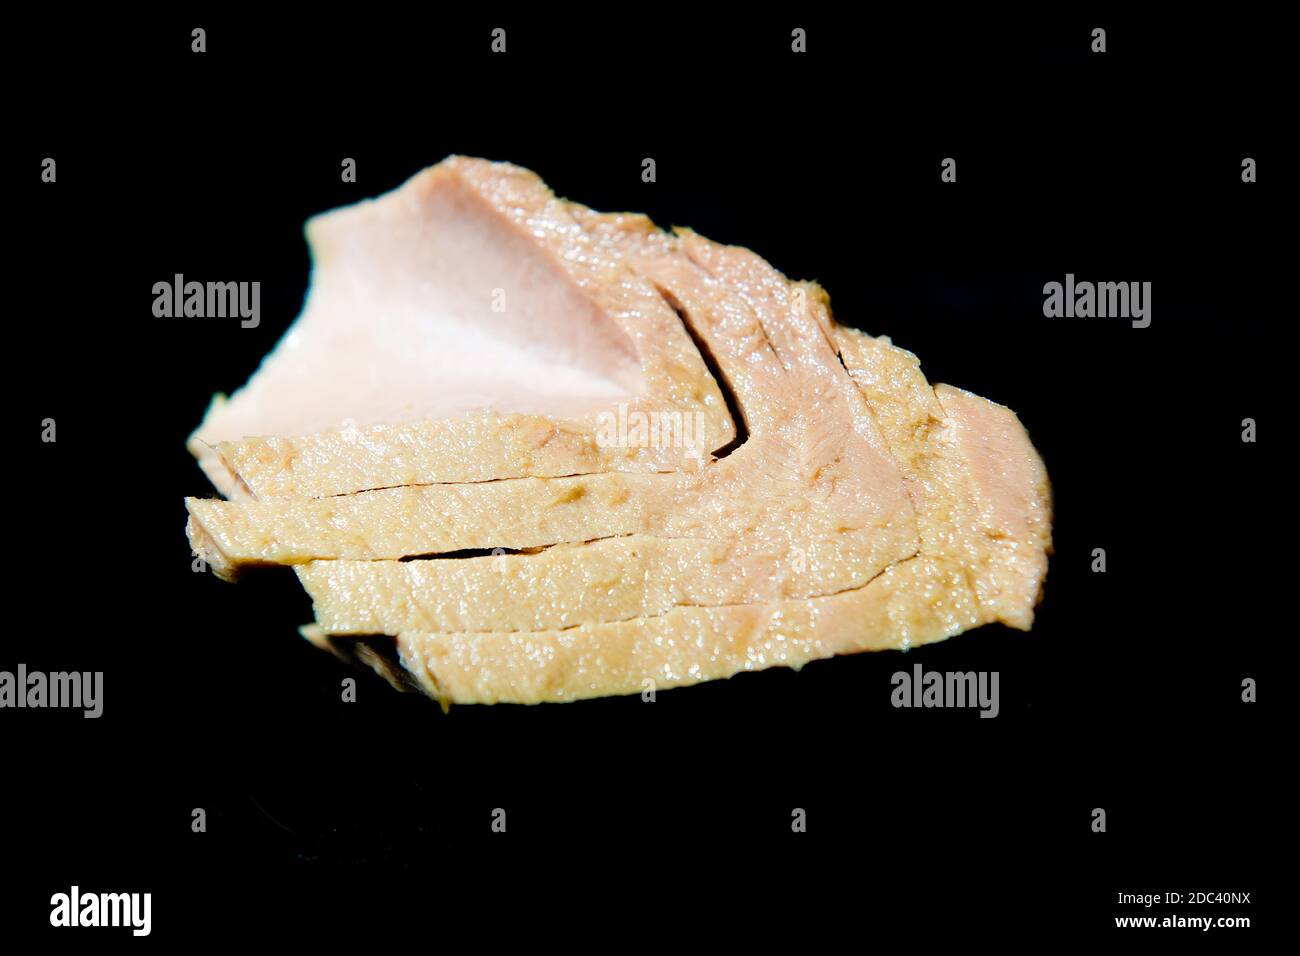 Italian tuna steak on a black background with copy space Stock Photo